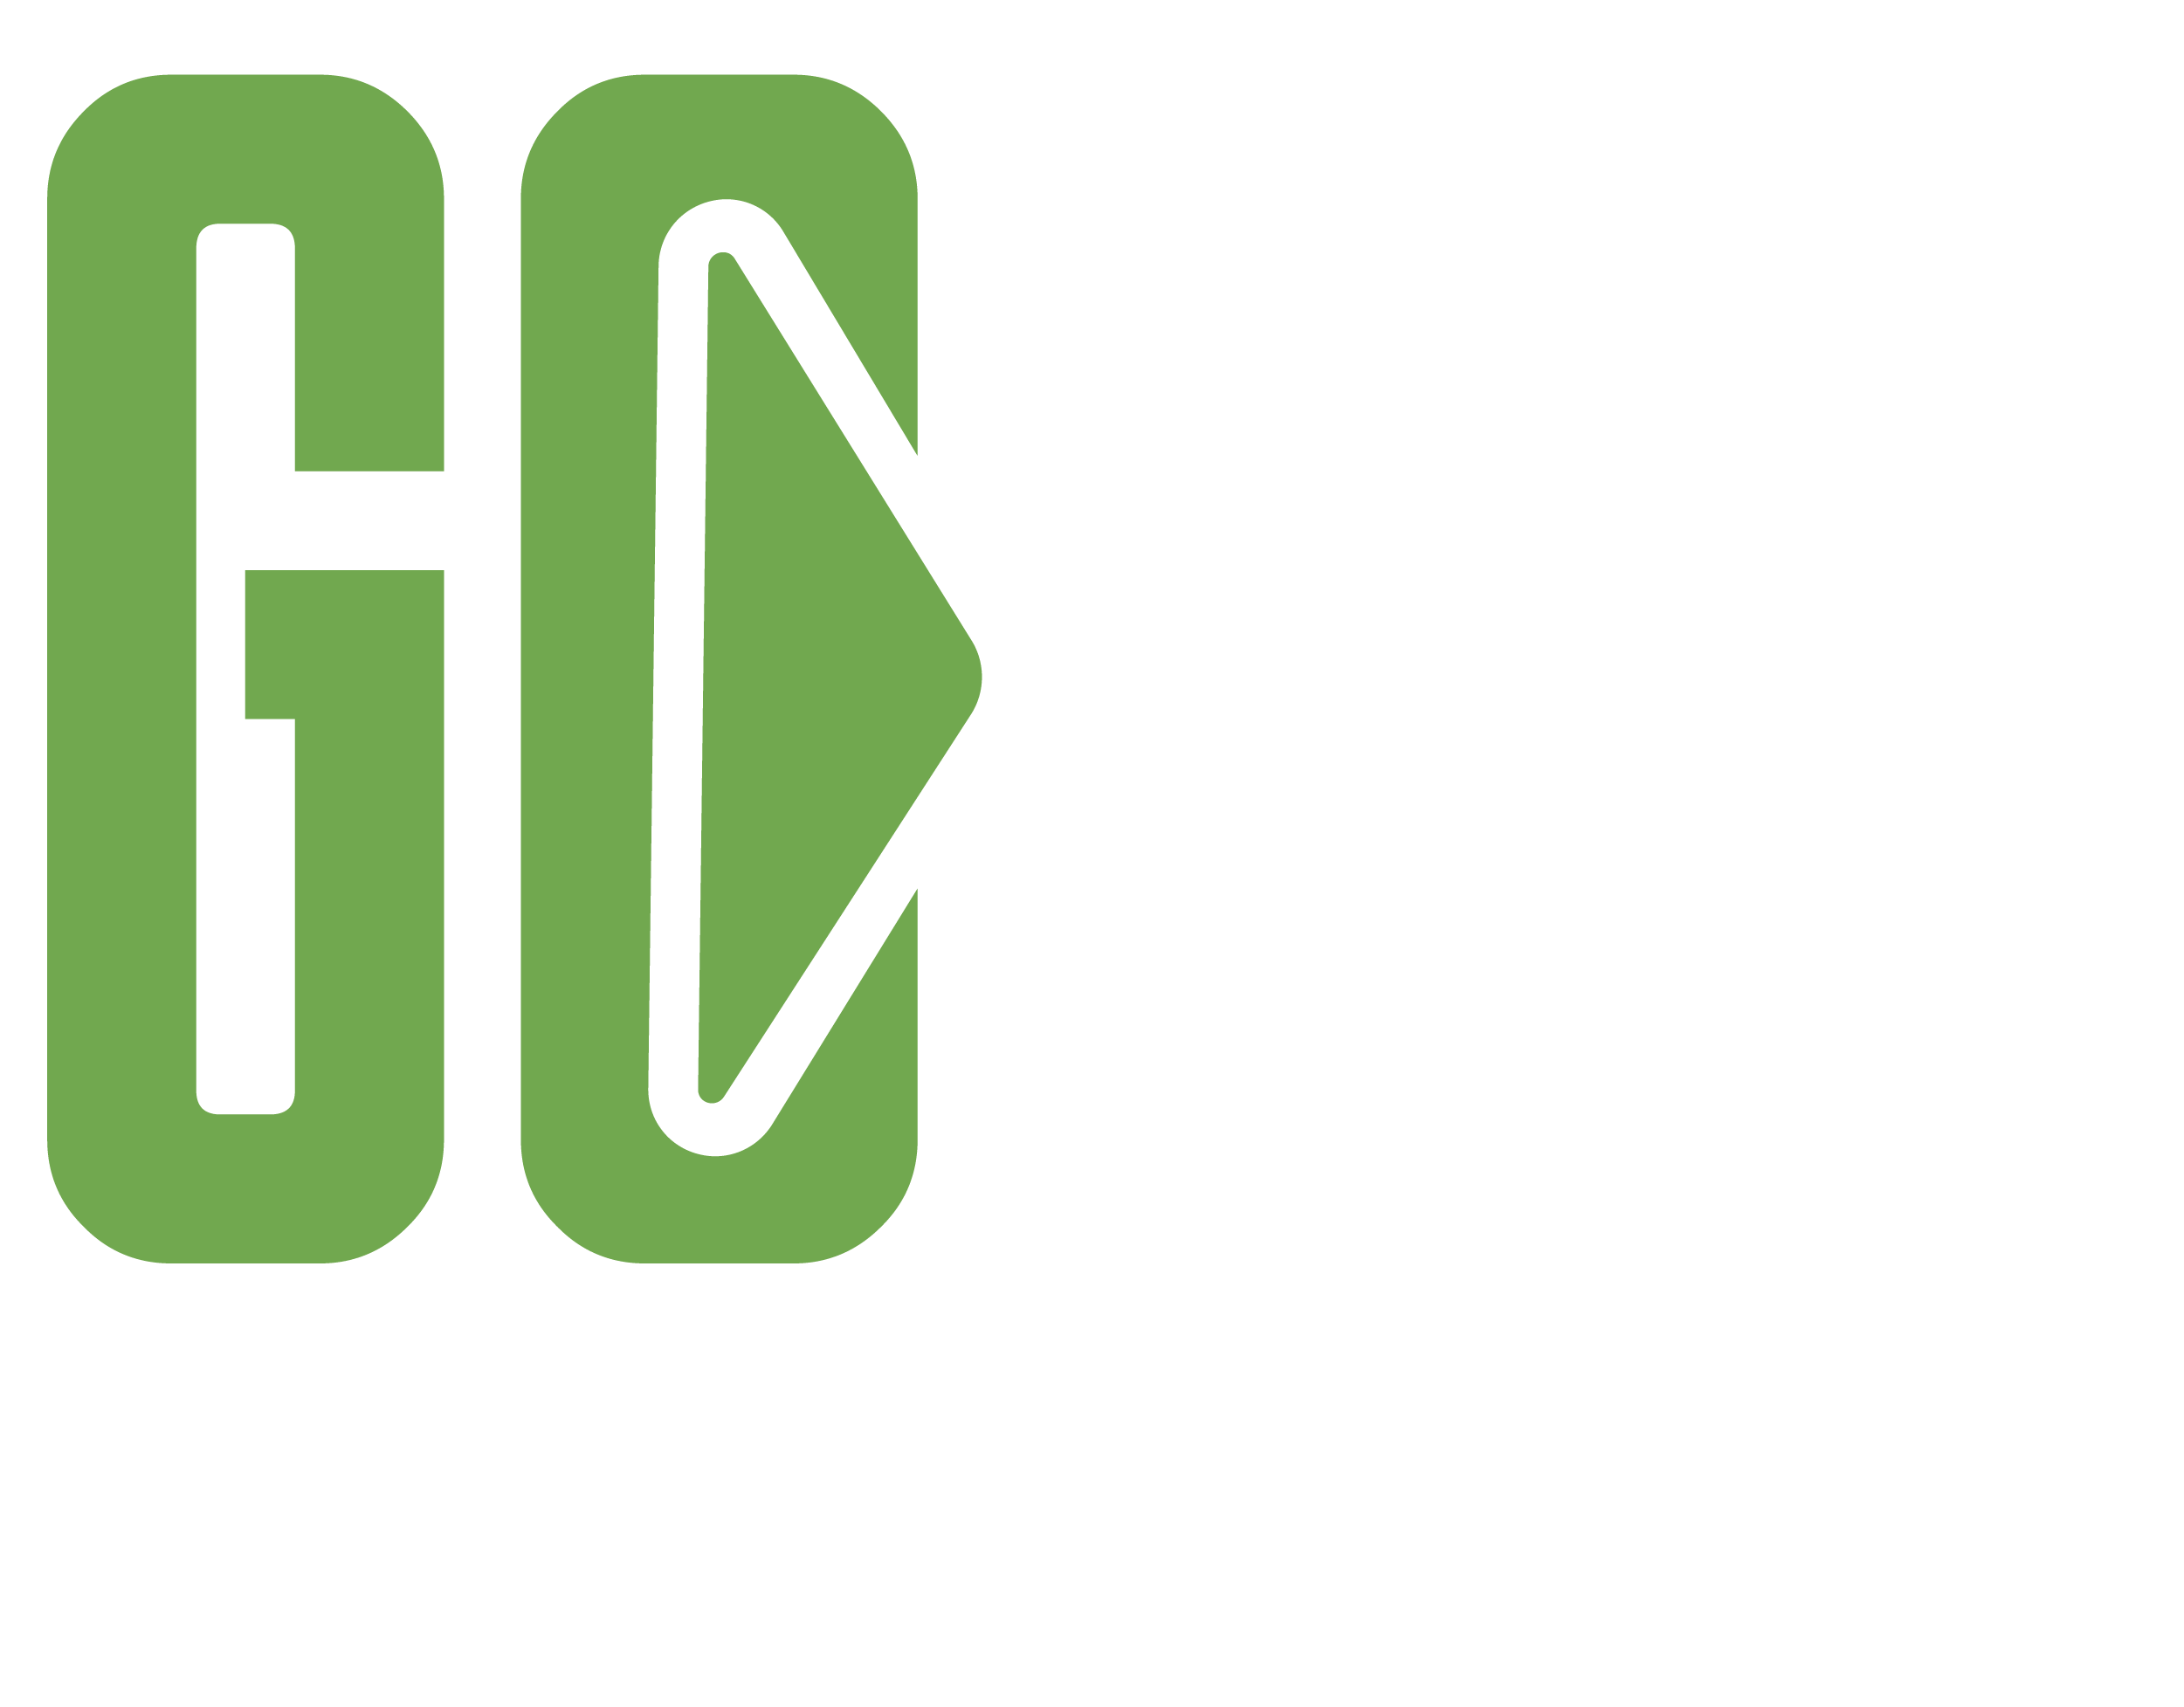 GO 901 Careers